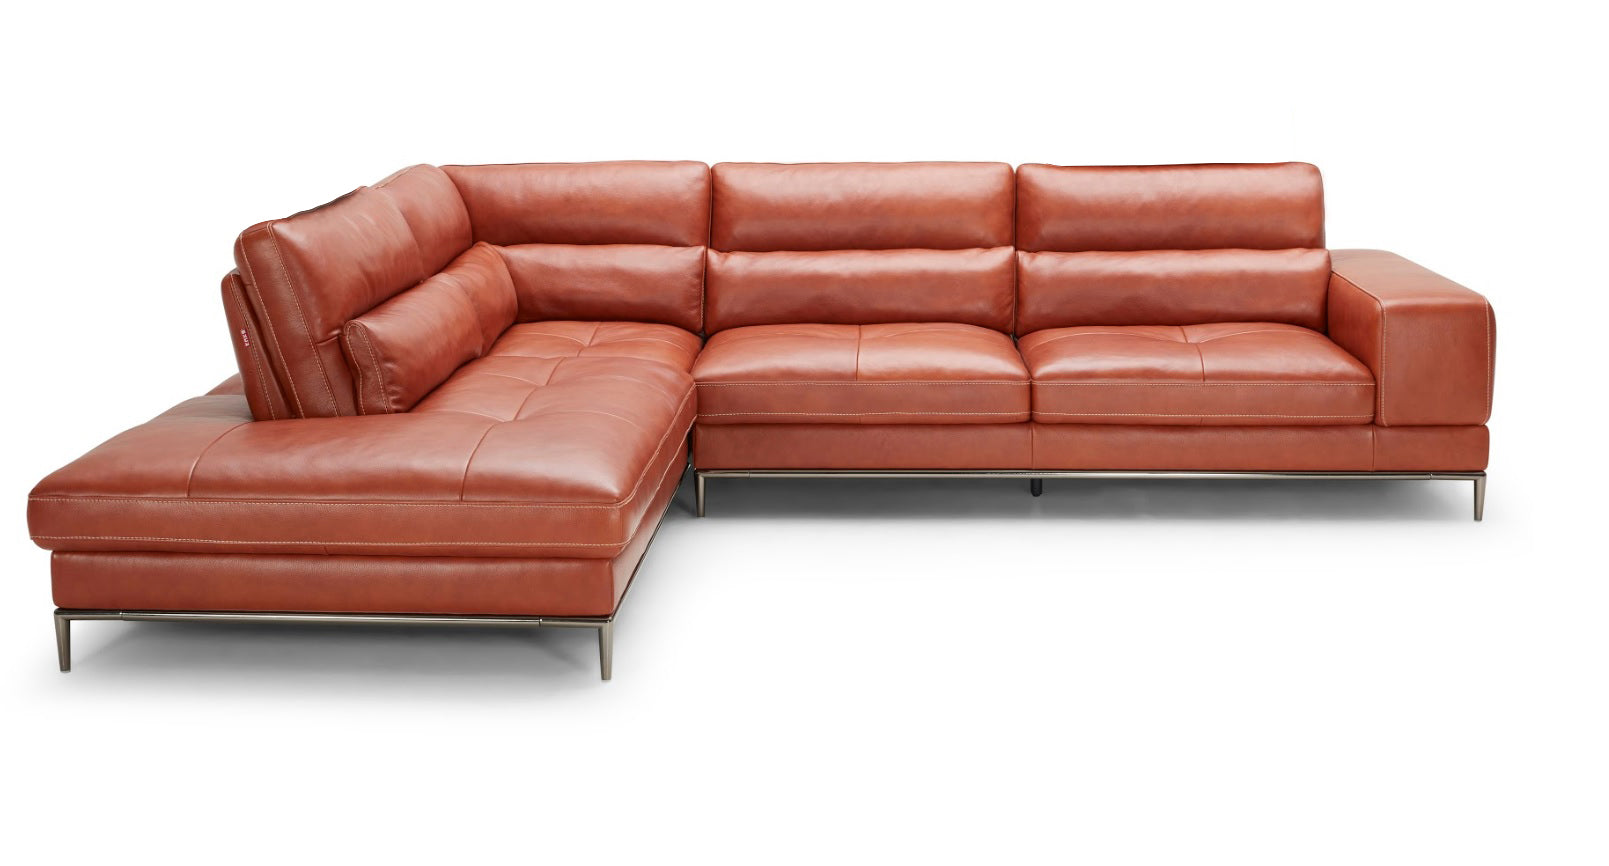 Vig Furniture Divani Casa Kudos - Modern Cognac LAF Chaise Sectional Sofa